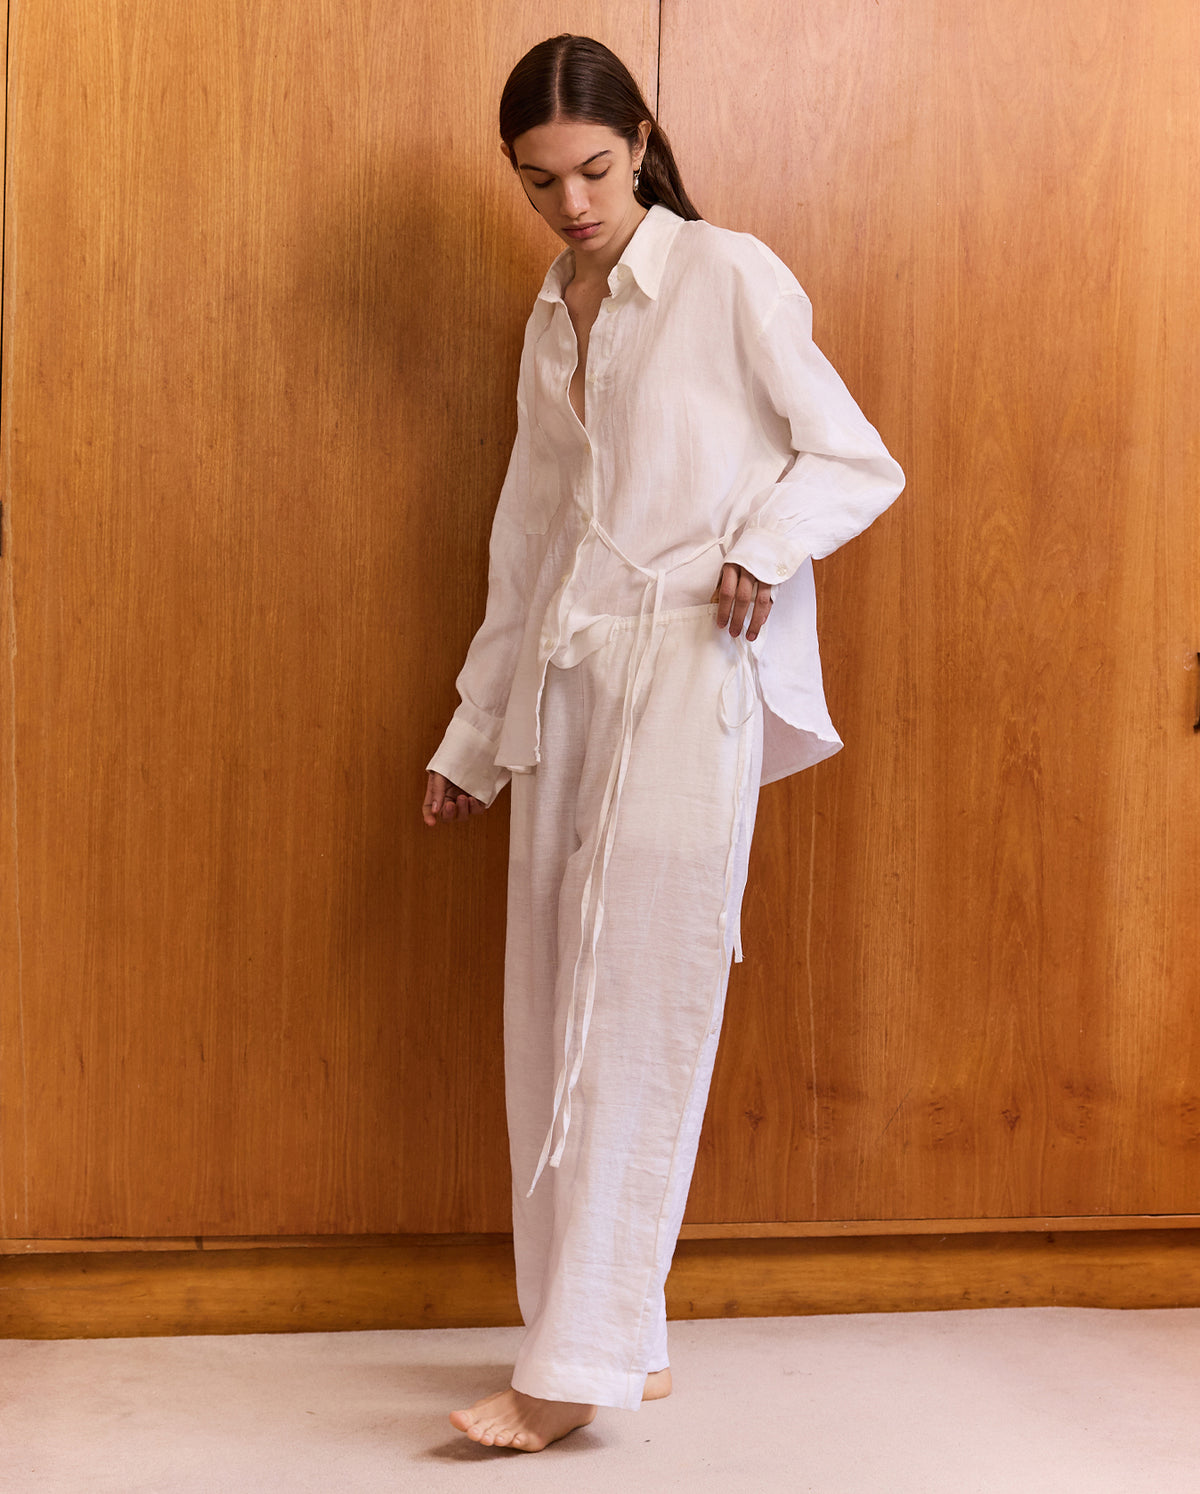 deiji studios matching set pajamas for women white